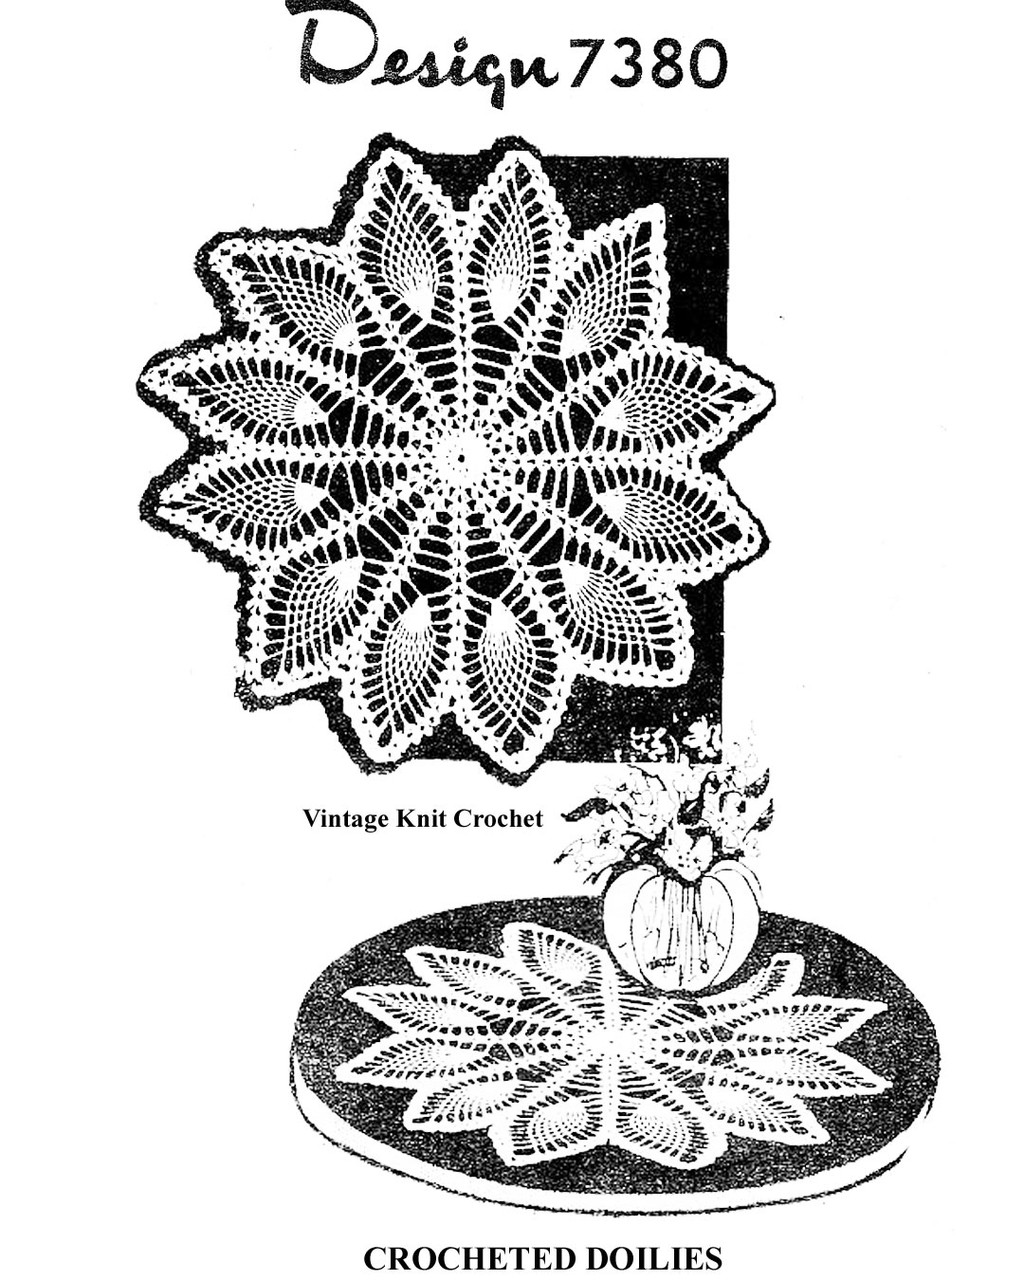 Vintage Pineapple Wheel Crocheted Doilies Pattern Mail Order Design 7380